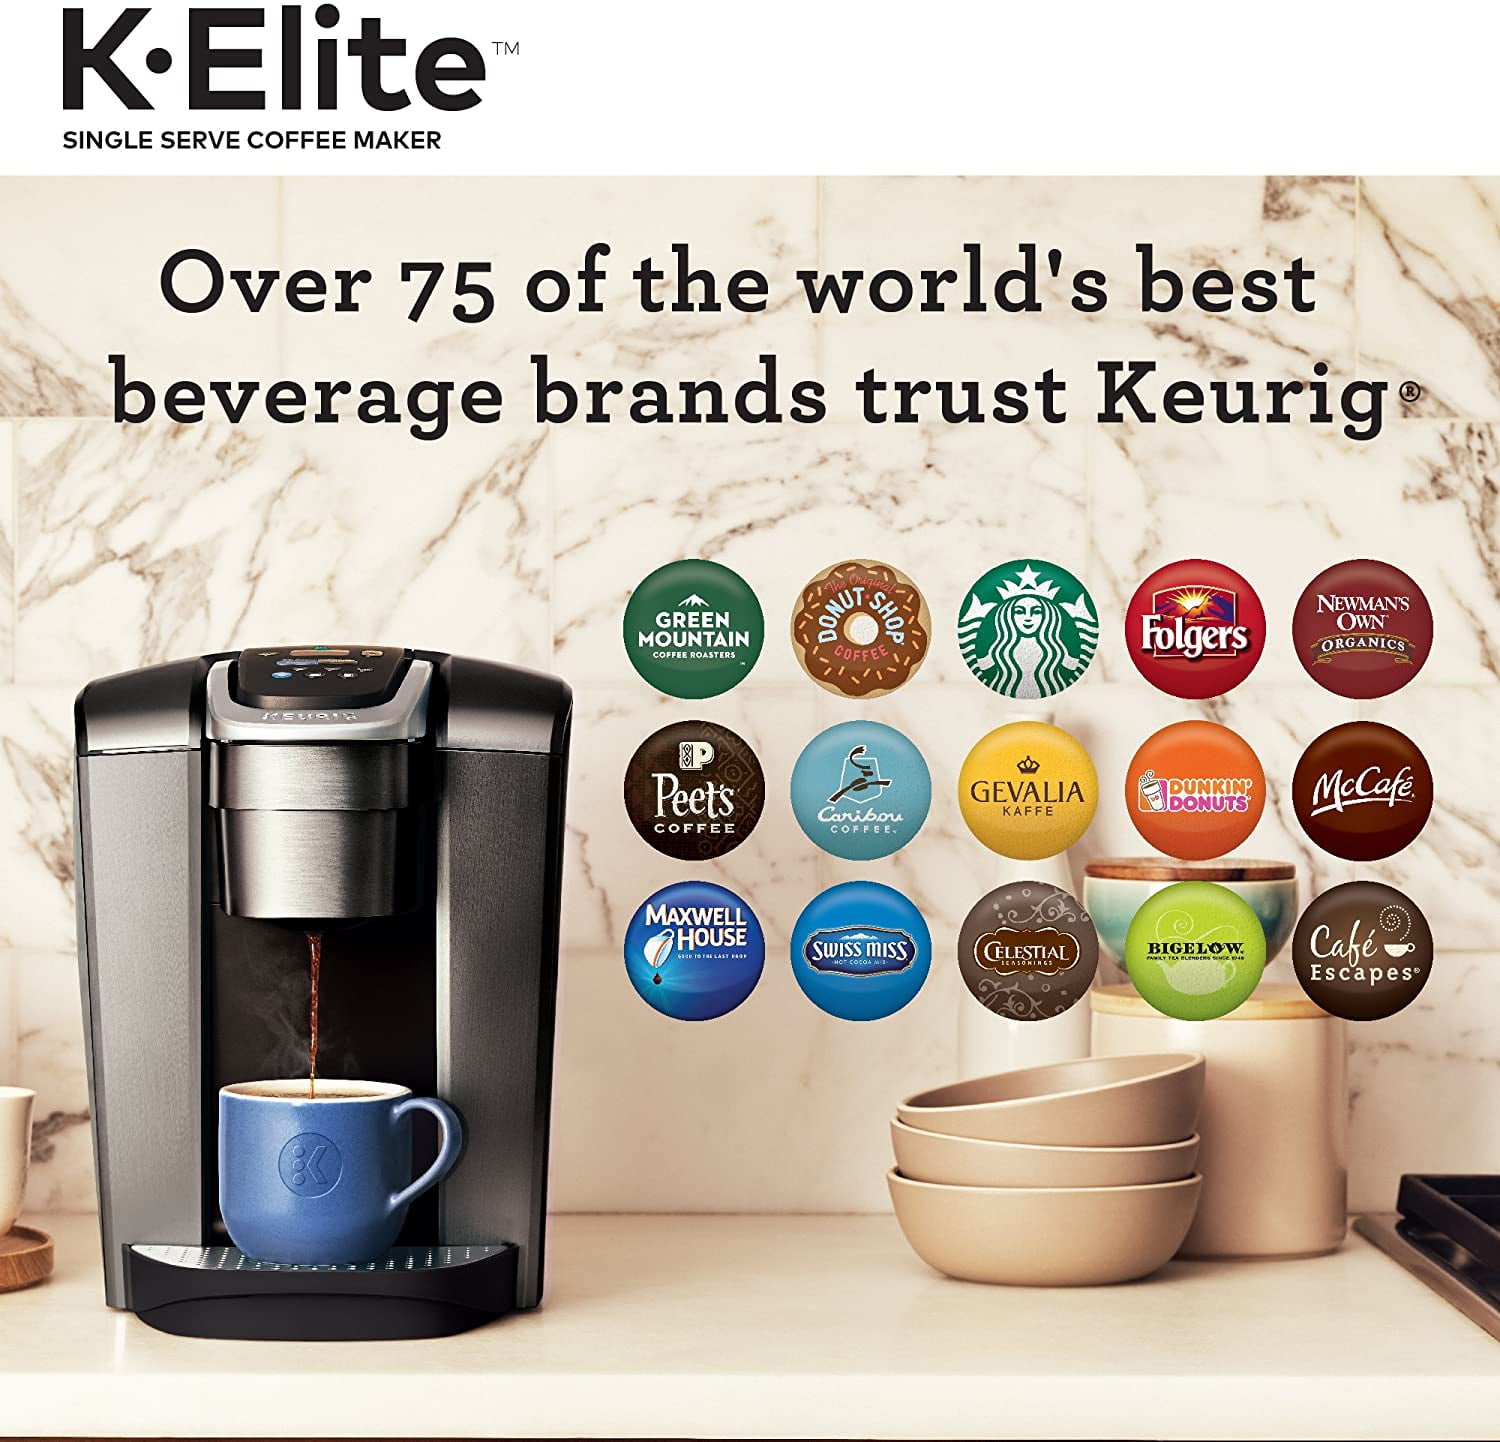 Keurig Brushed Slate 15 Cup Single-Serve Brewer Coffee Maker